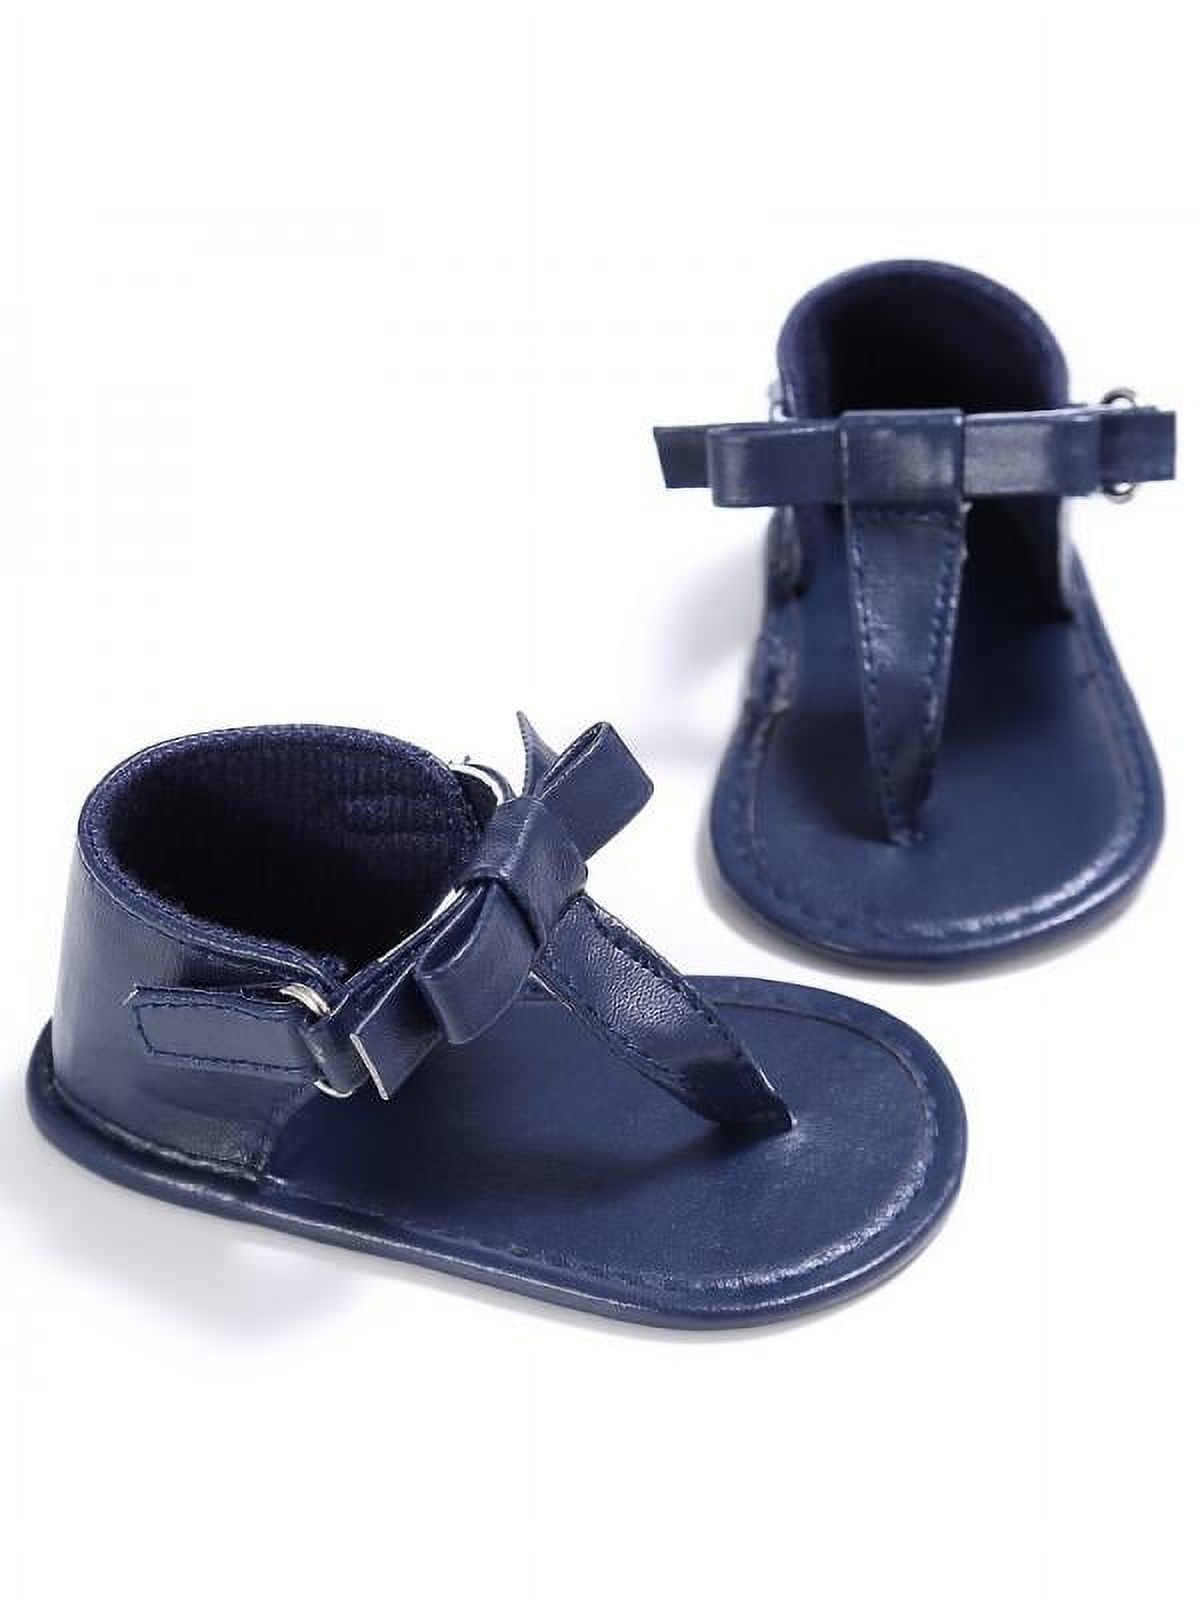 Ochine Newborn PU Leather Soft Shoes Summer Baby Casual Flower Toddler Prewalker Sandals - image 2 of 6